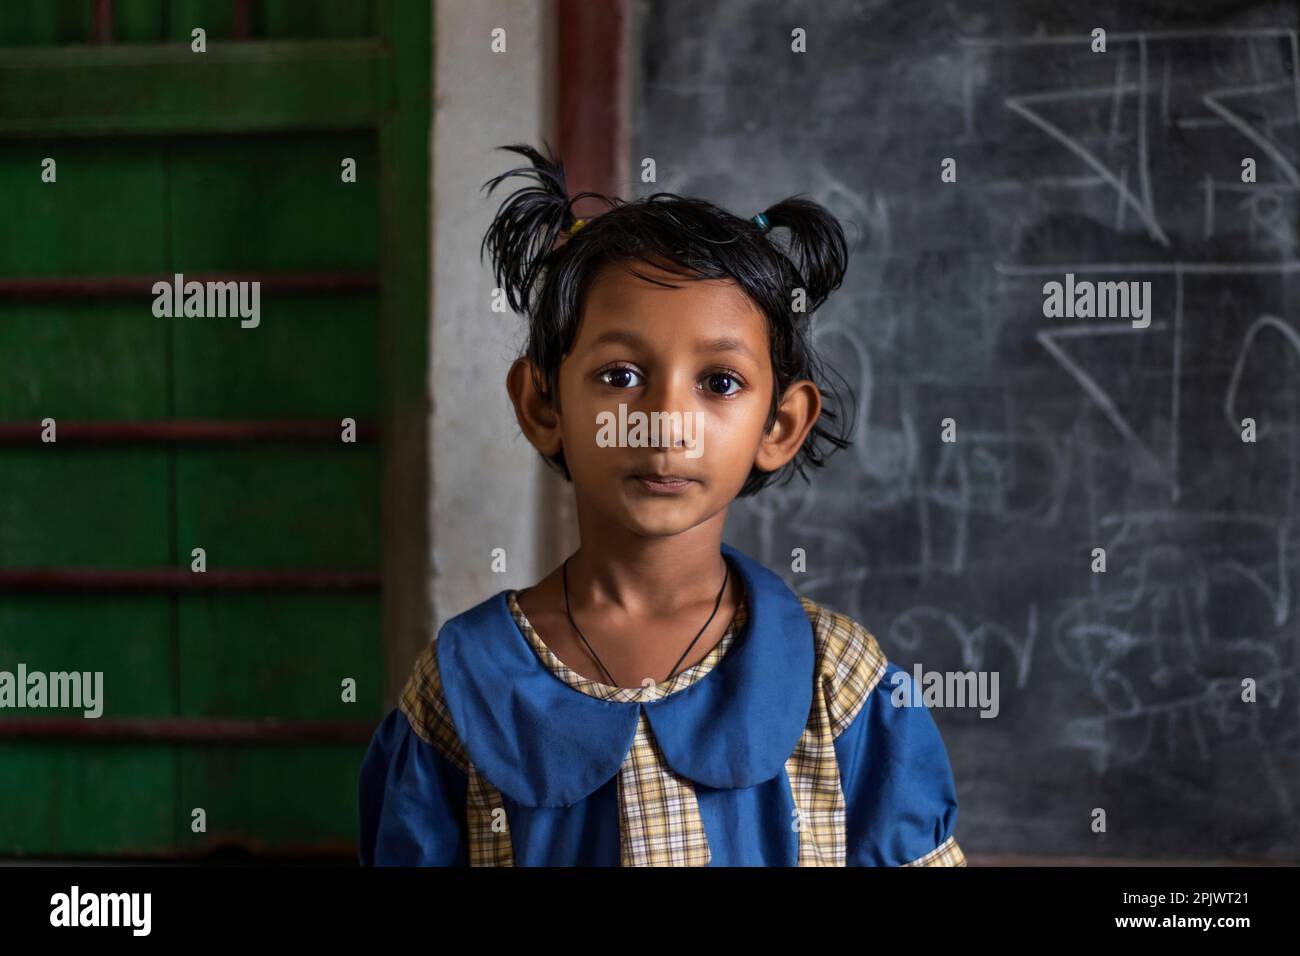 School girl standing by the blackboard at school Stock Photo